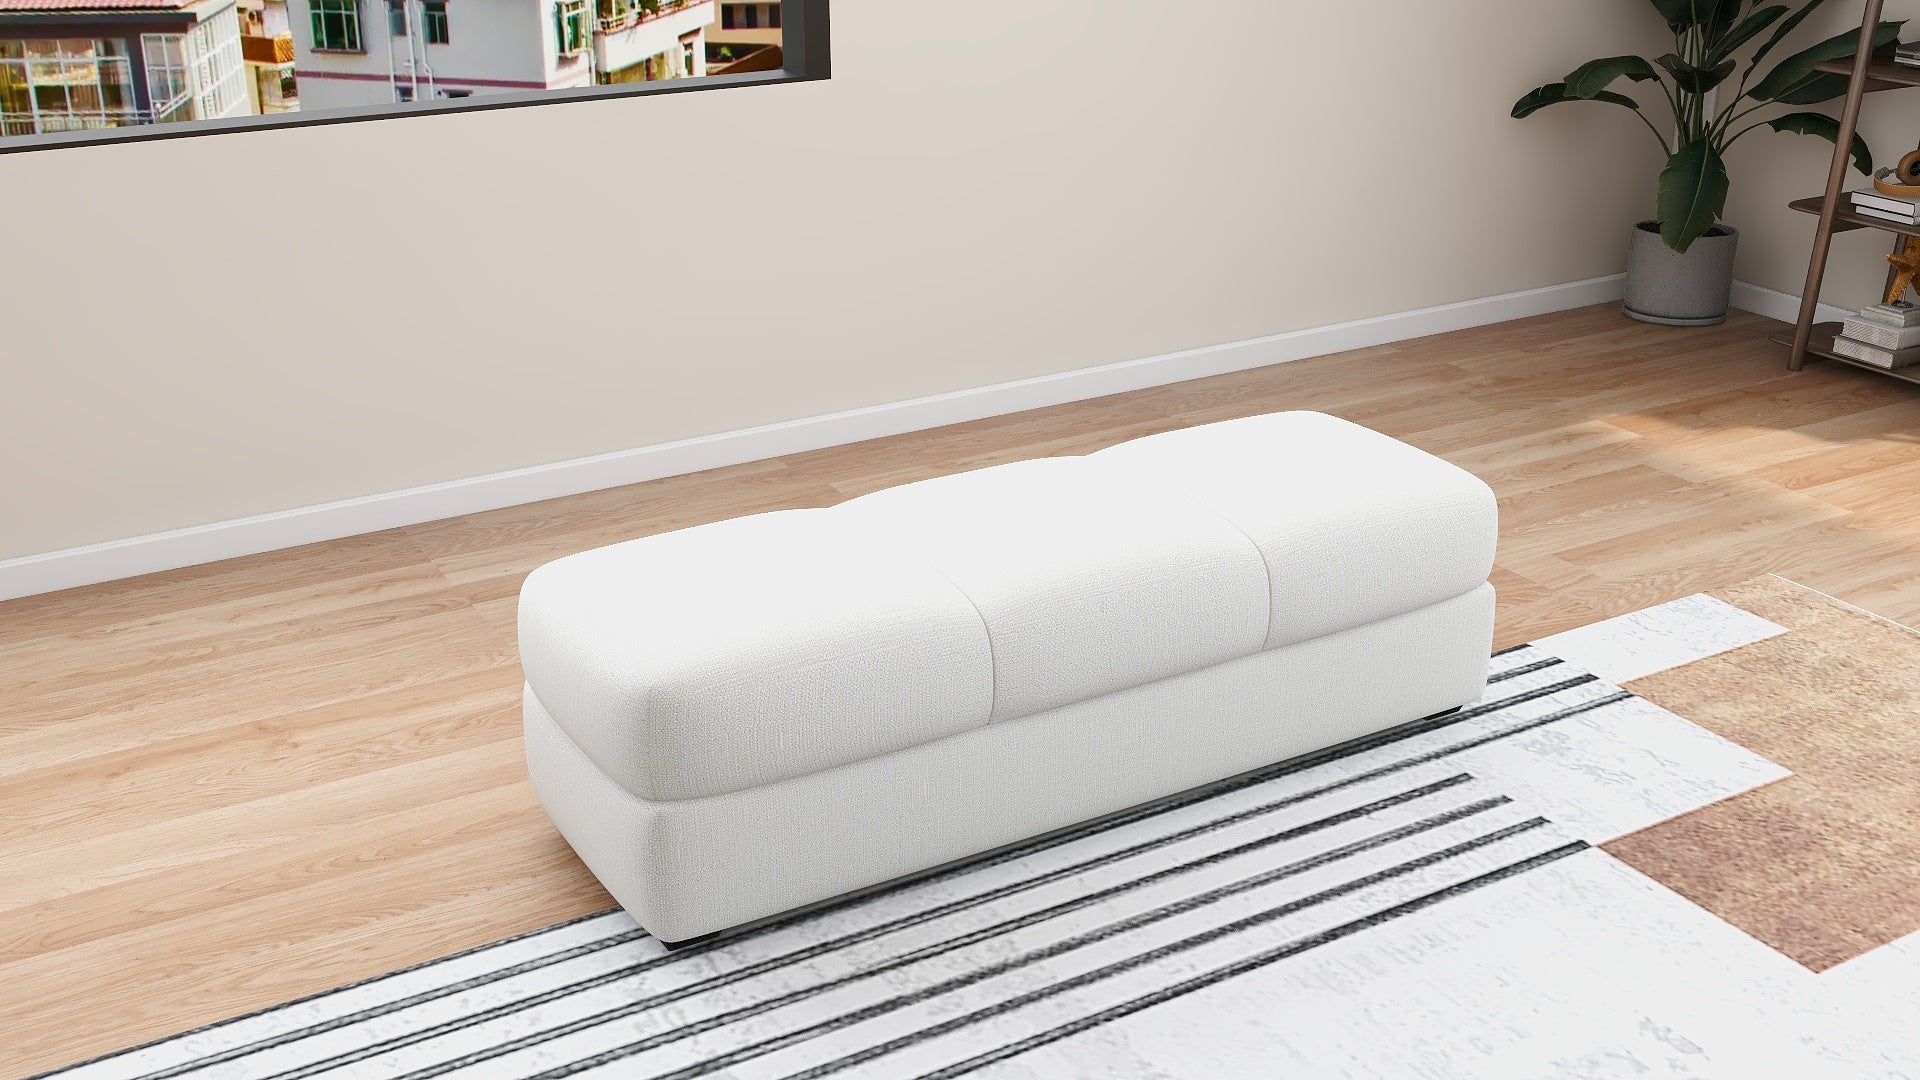 CRYSTAL Fabric Sofa Bench AF Home